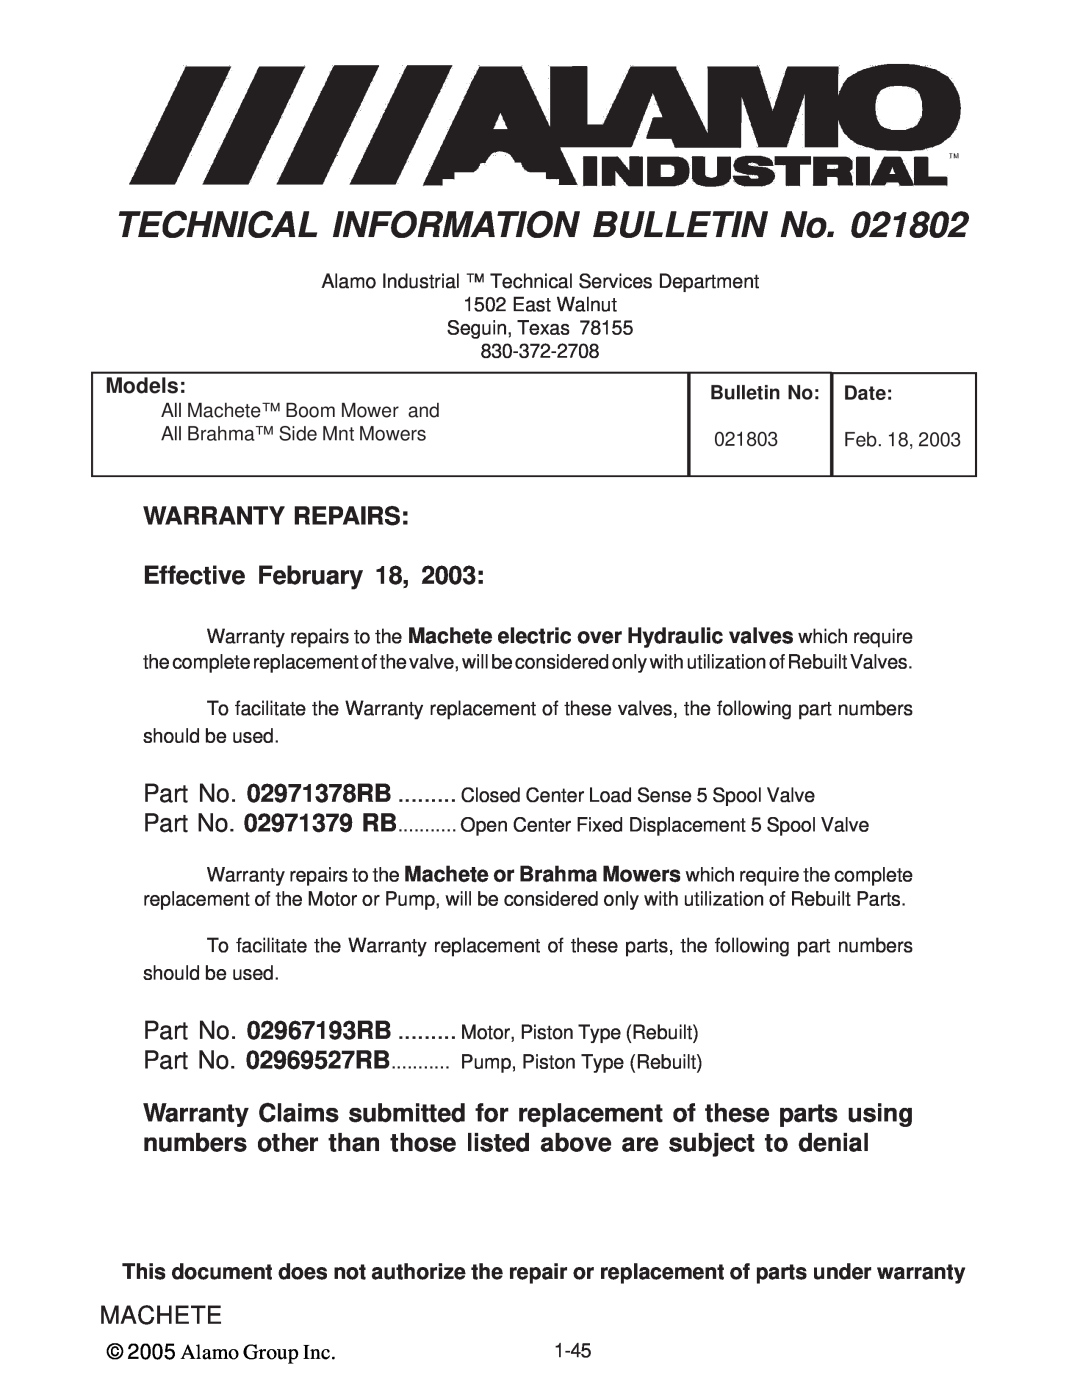 Alamo T 7740 manual WARRANTY REPAIRS Effective February 18, Part No. 02967193RB, Bulletin No: Date, Machete, Models 